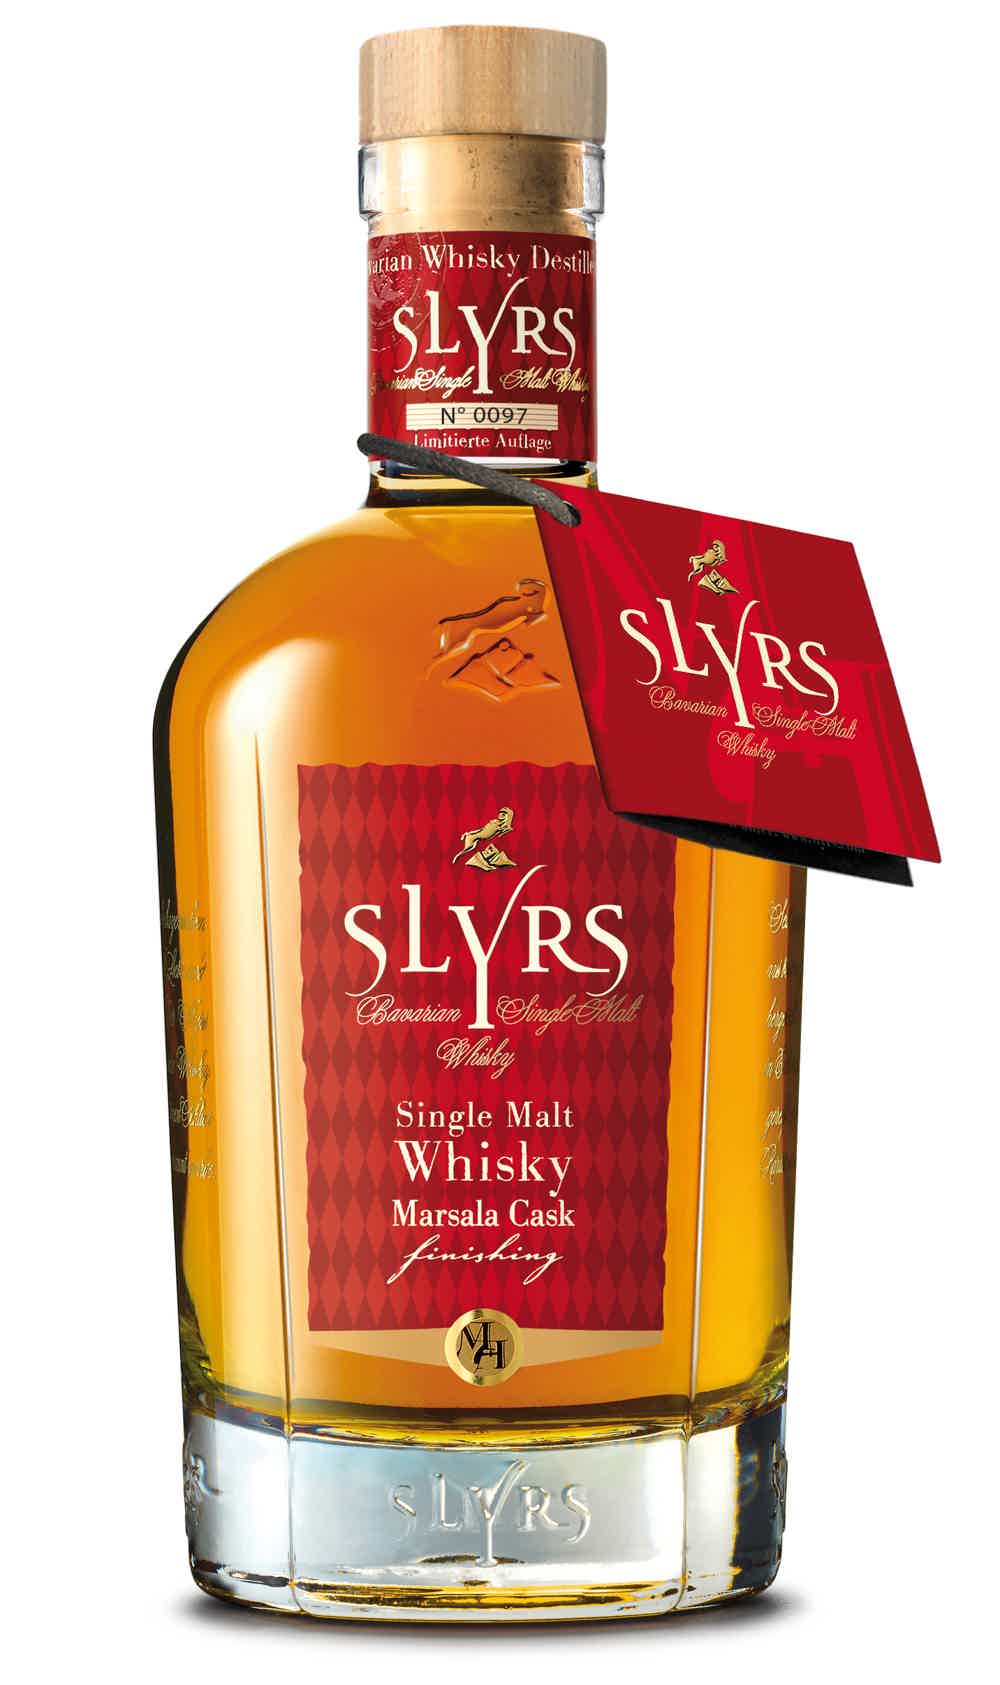 SLYRS Single Malt Whisky Marsala Cask Finish 46% vol. 46.0% 0.35L, Spirits